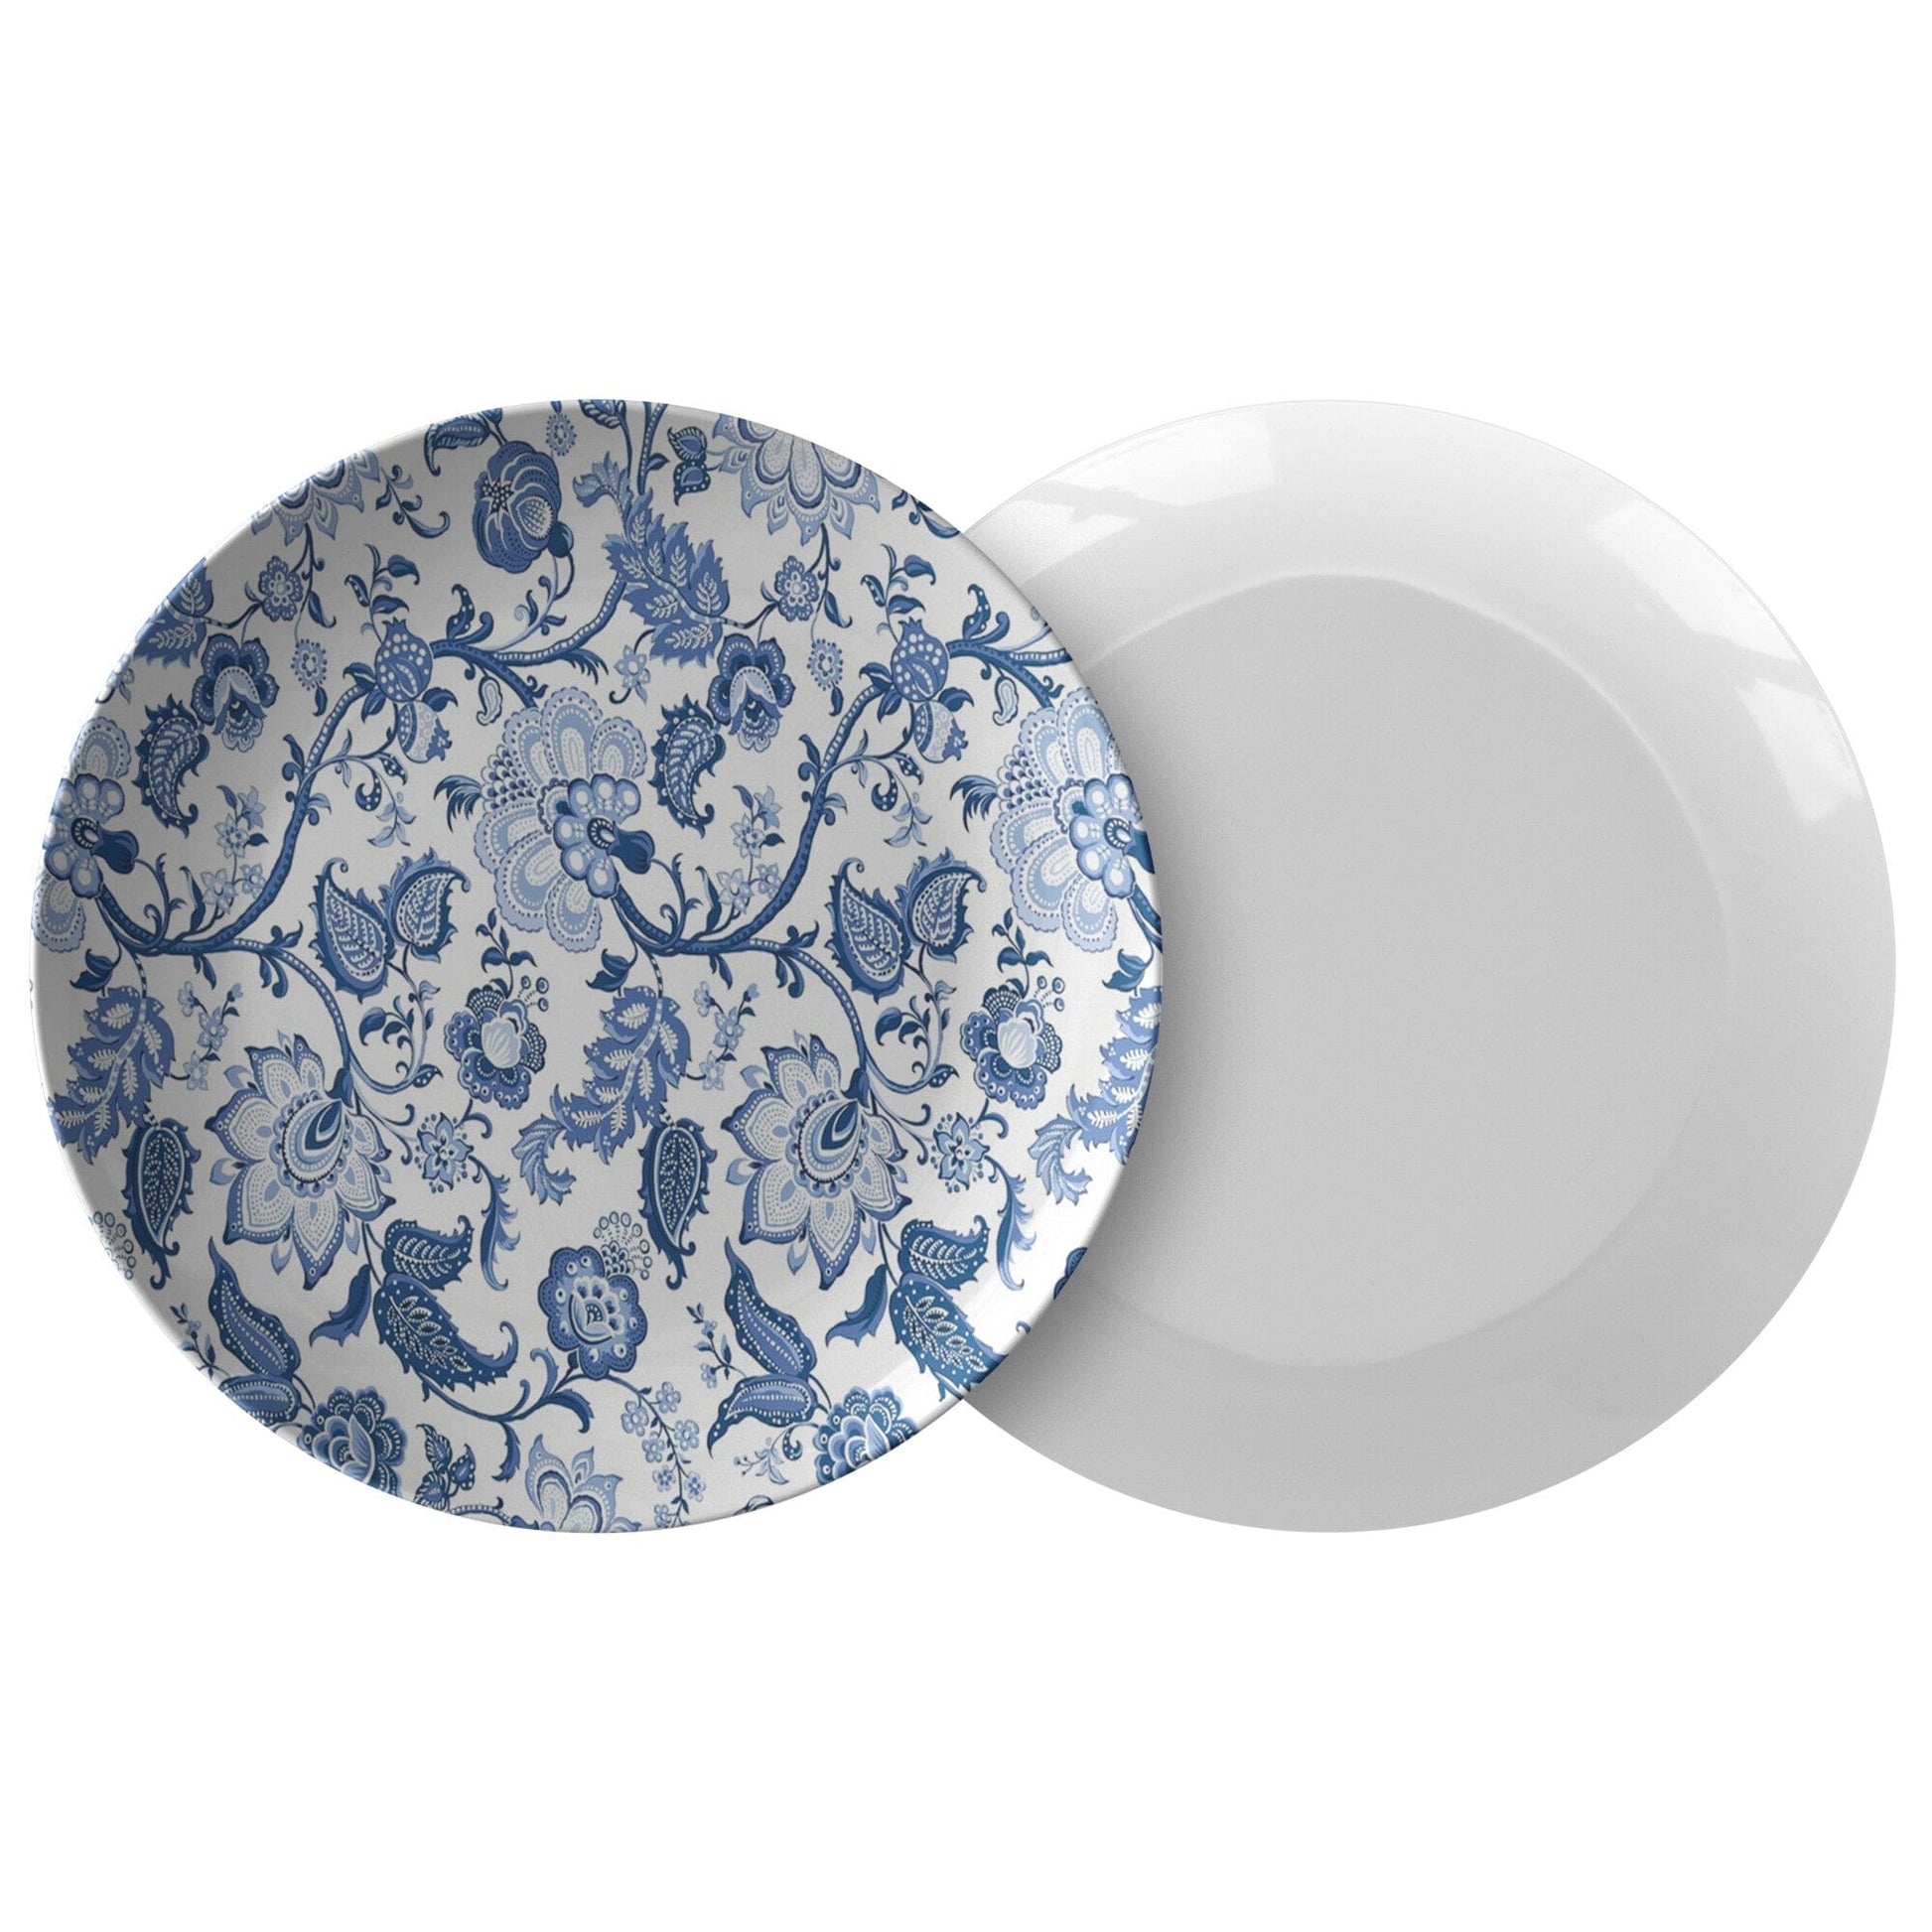 Kate McEnroe New York Chinoiserie Blue and White Floral Dinner Plates Plates